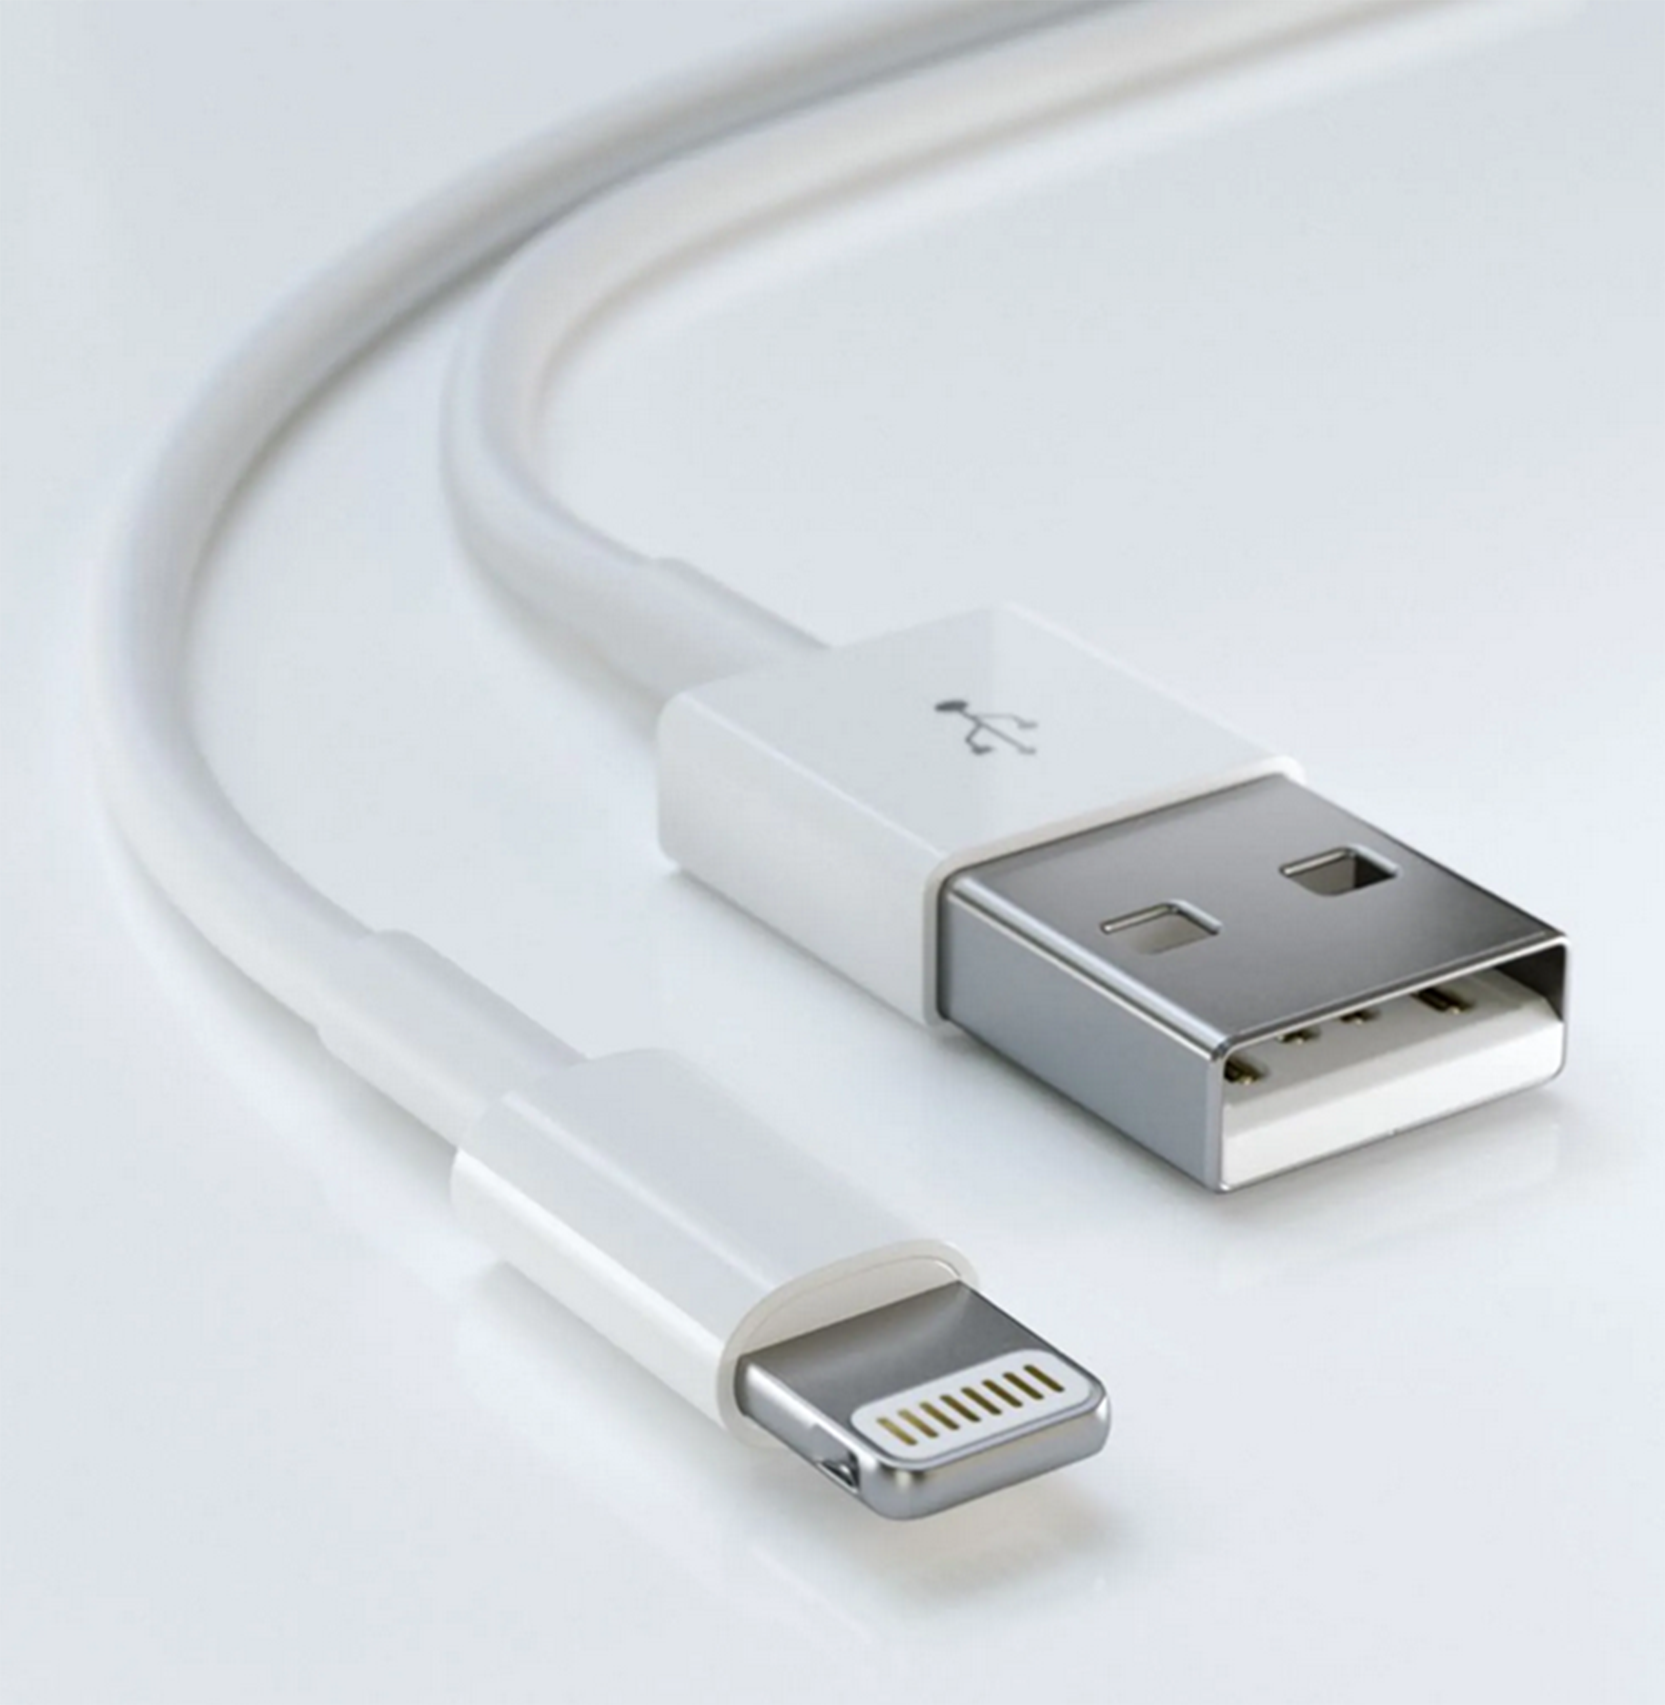 3x iPhone XR Lightning auf USB Kabel 2m Ladekabel